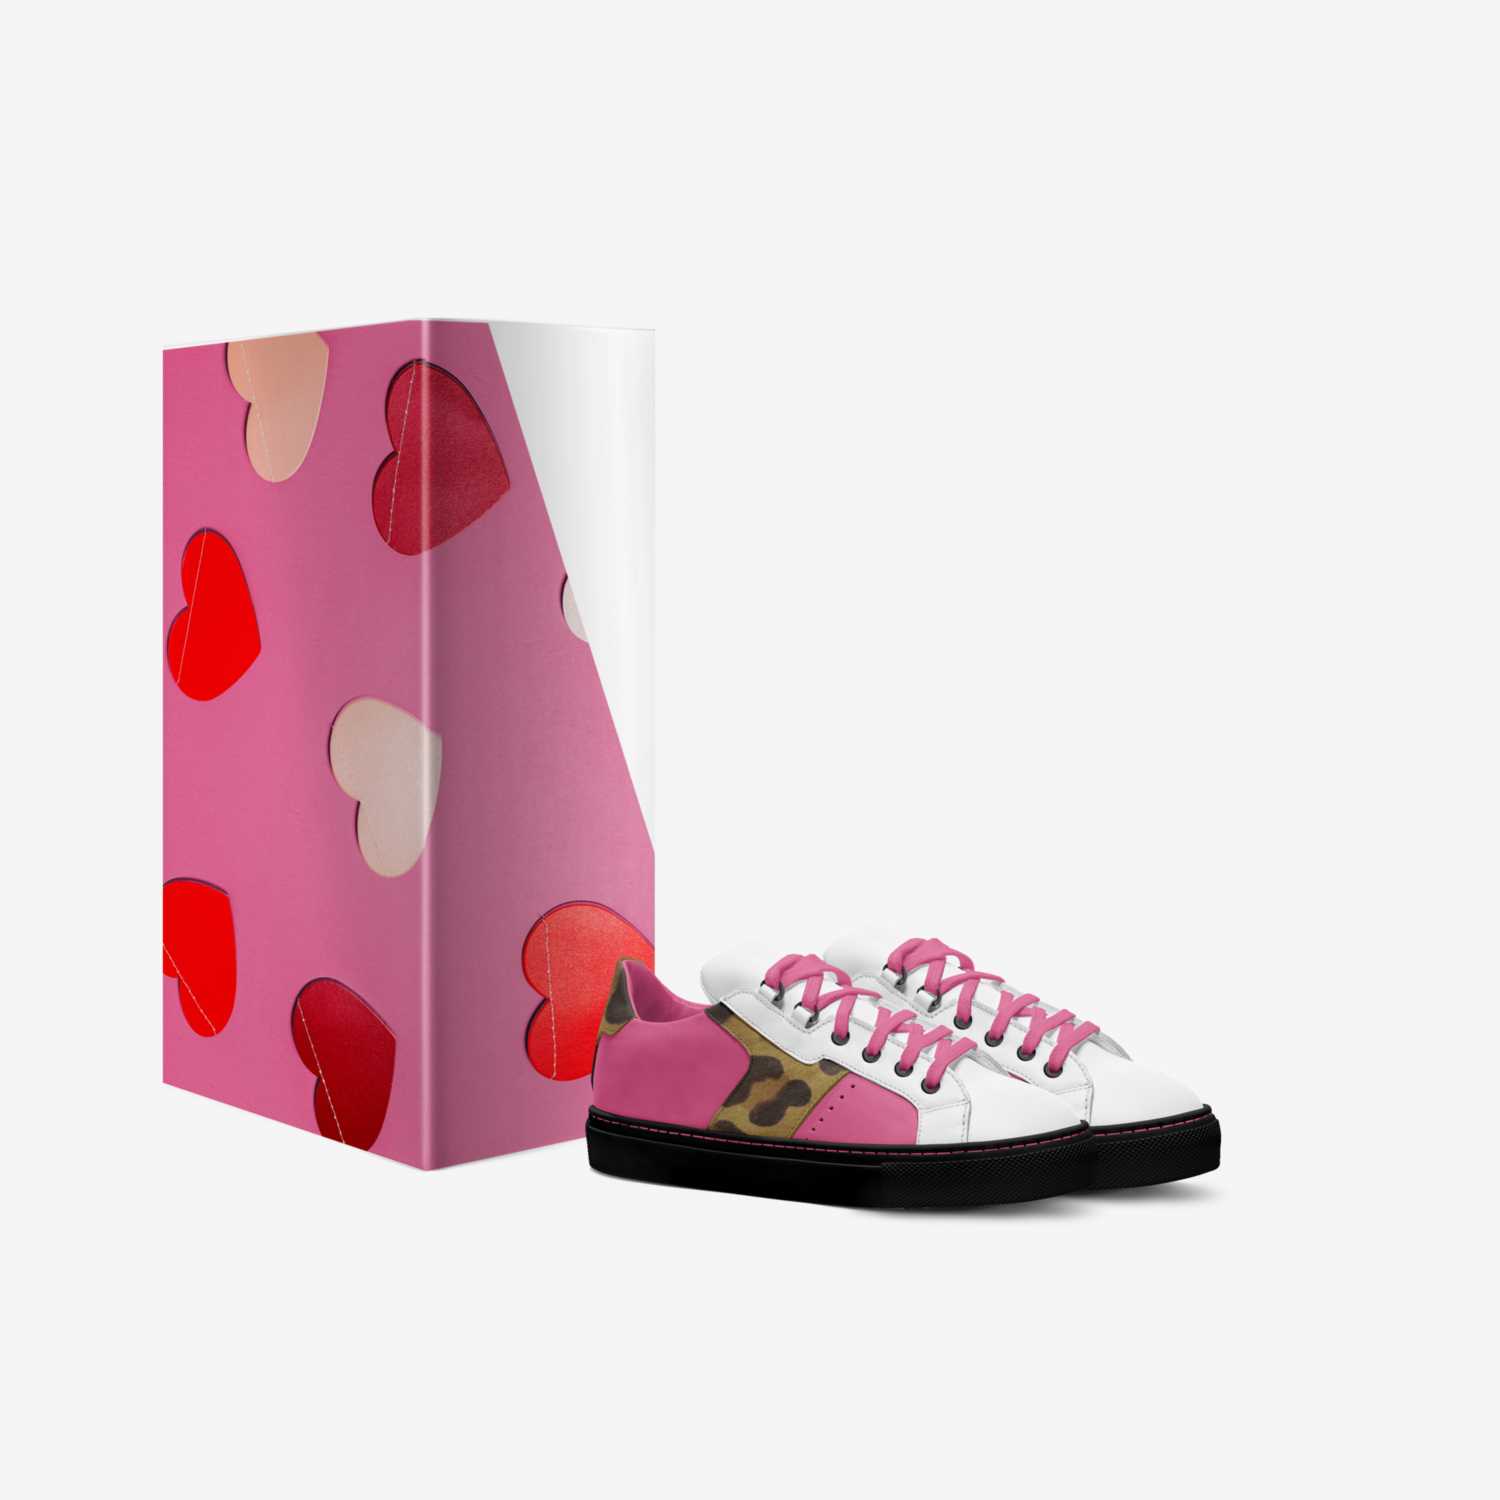 JAPER FOOTWEAR custom made in Italy shoes by Rashida Brown | Box view